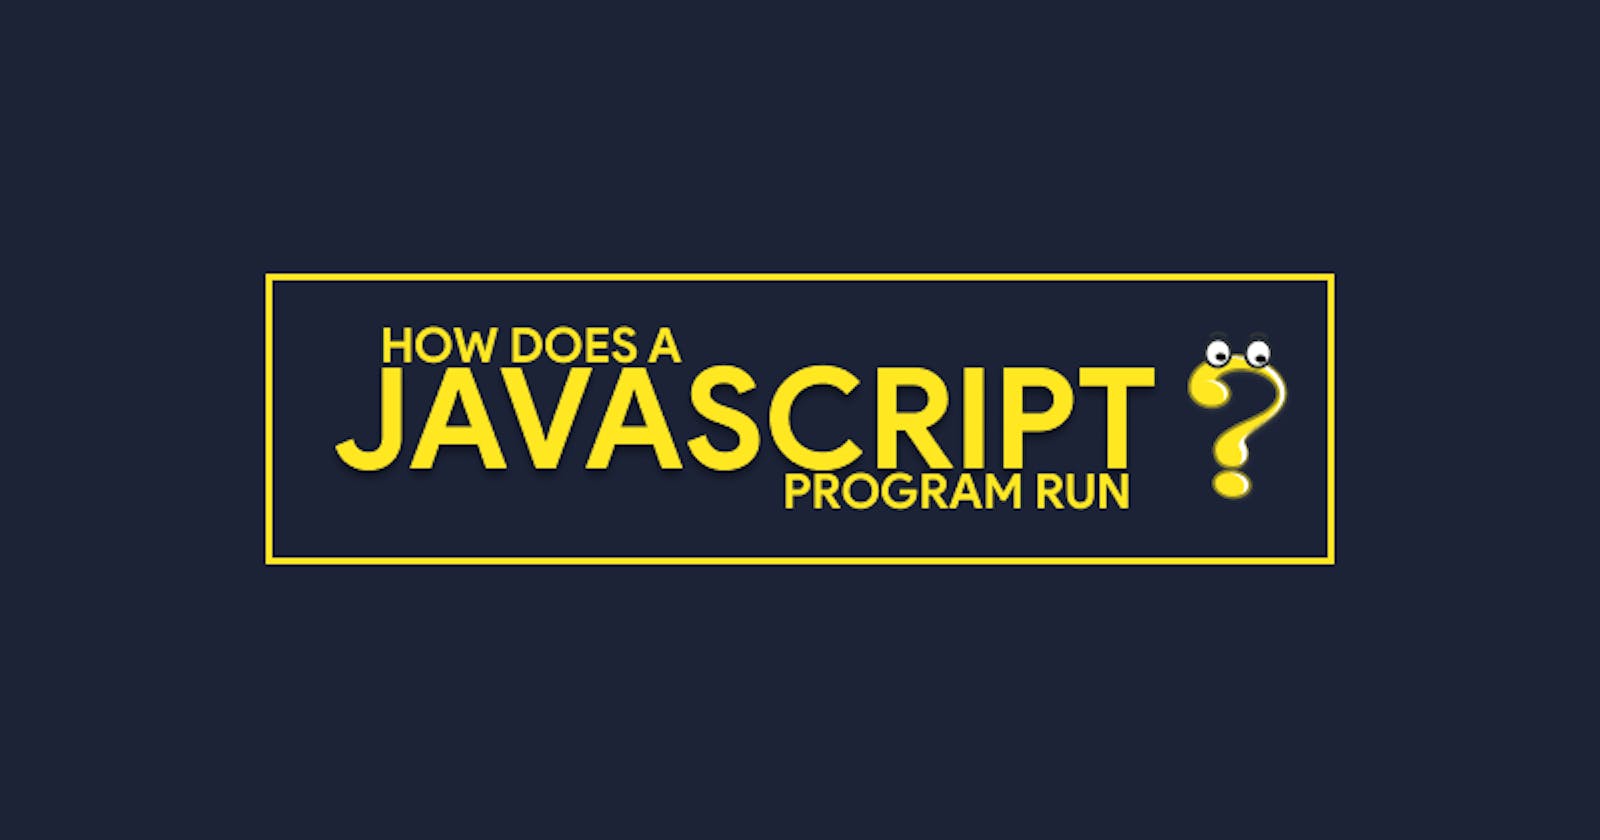 How does a JavaScript Program run?